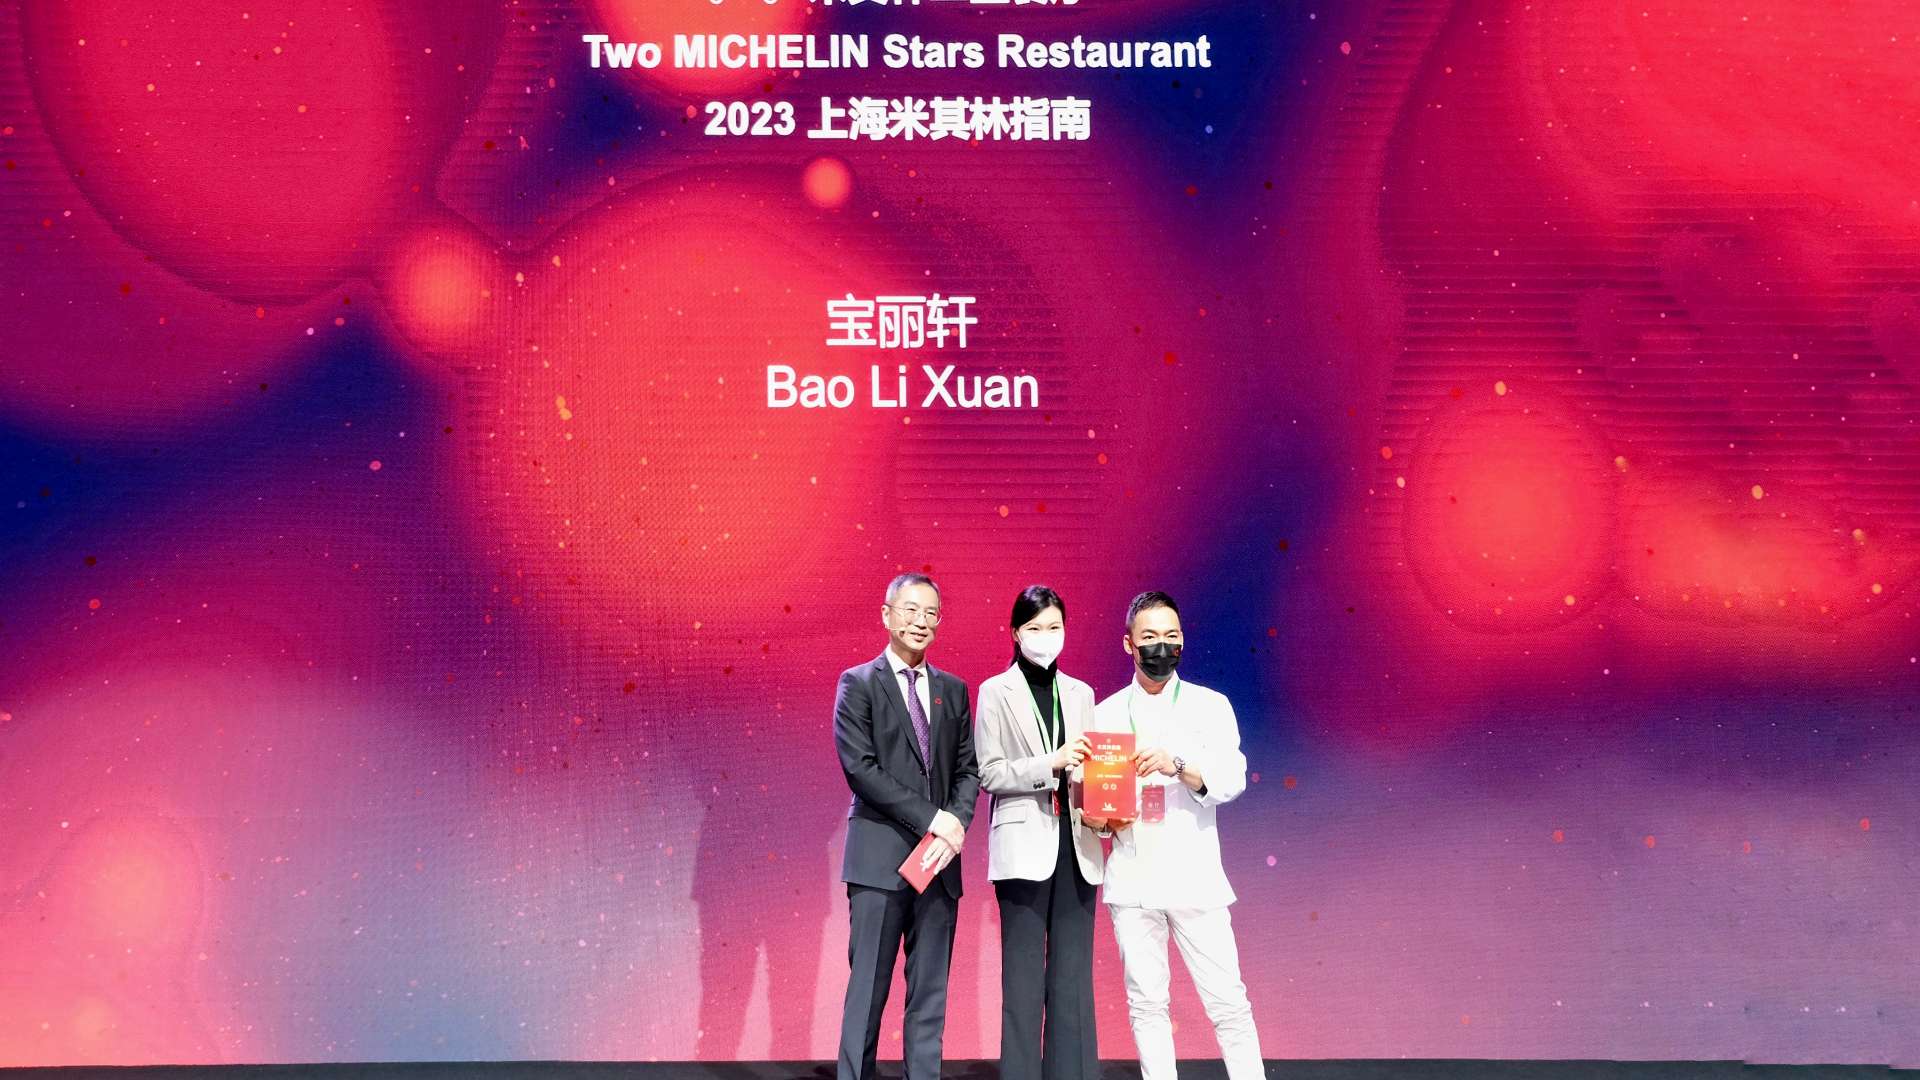 Bulgari Hotel Shanghai Whats On Star Michelin